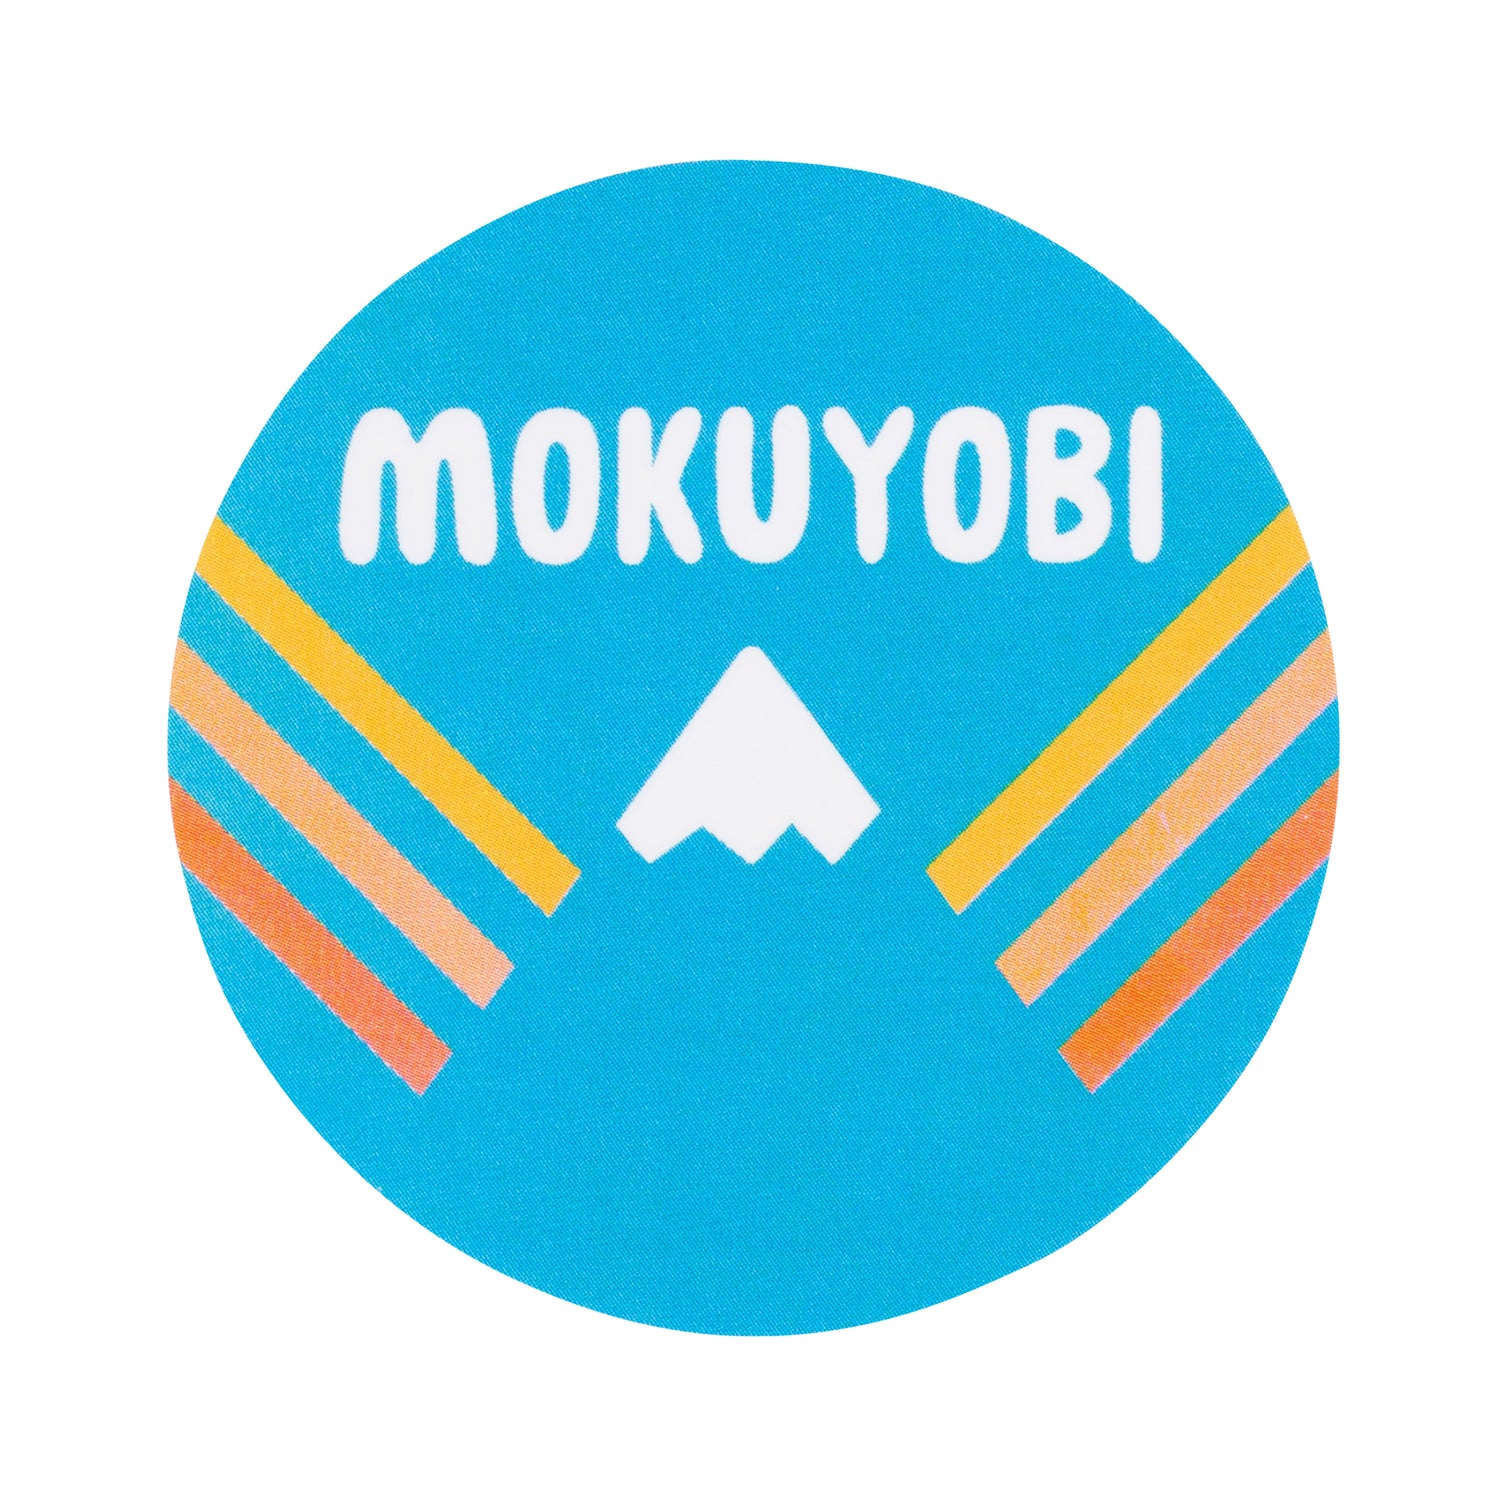 Mokuyobi Mountain Sticker